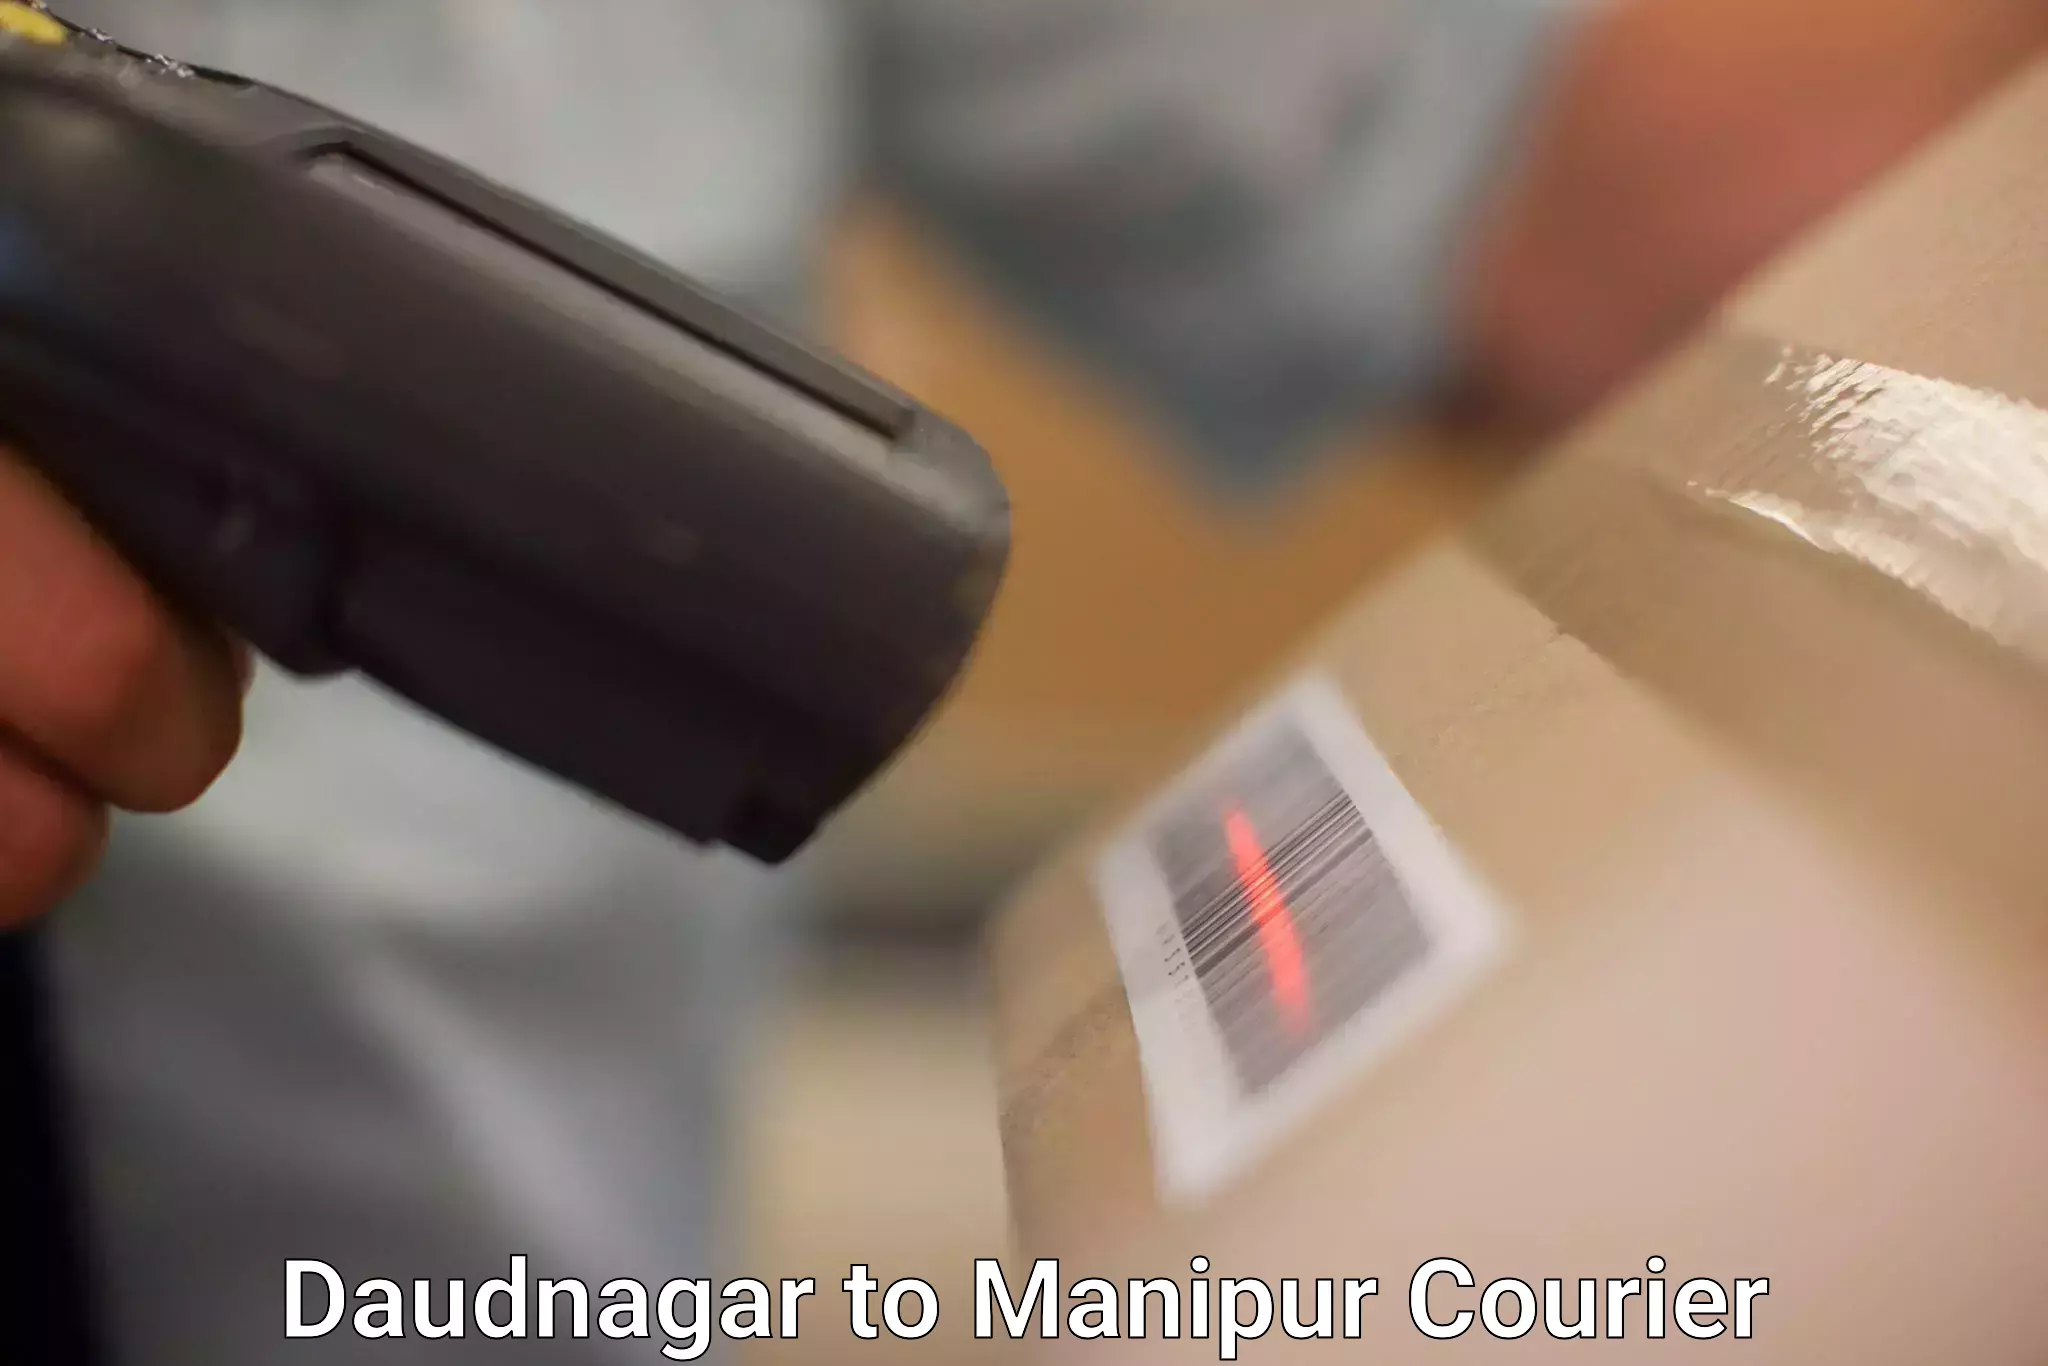 Courier service comparison Daudnagar to Manipur